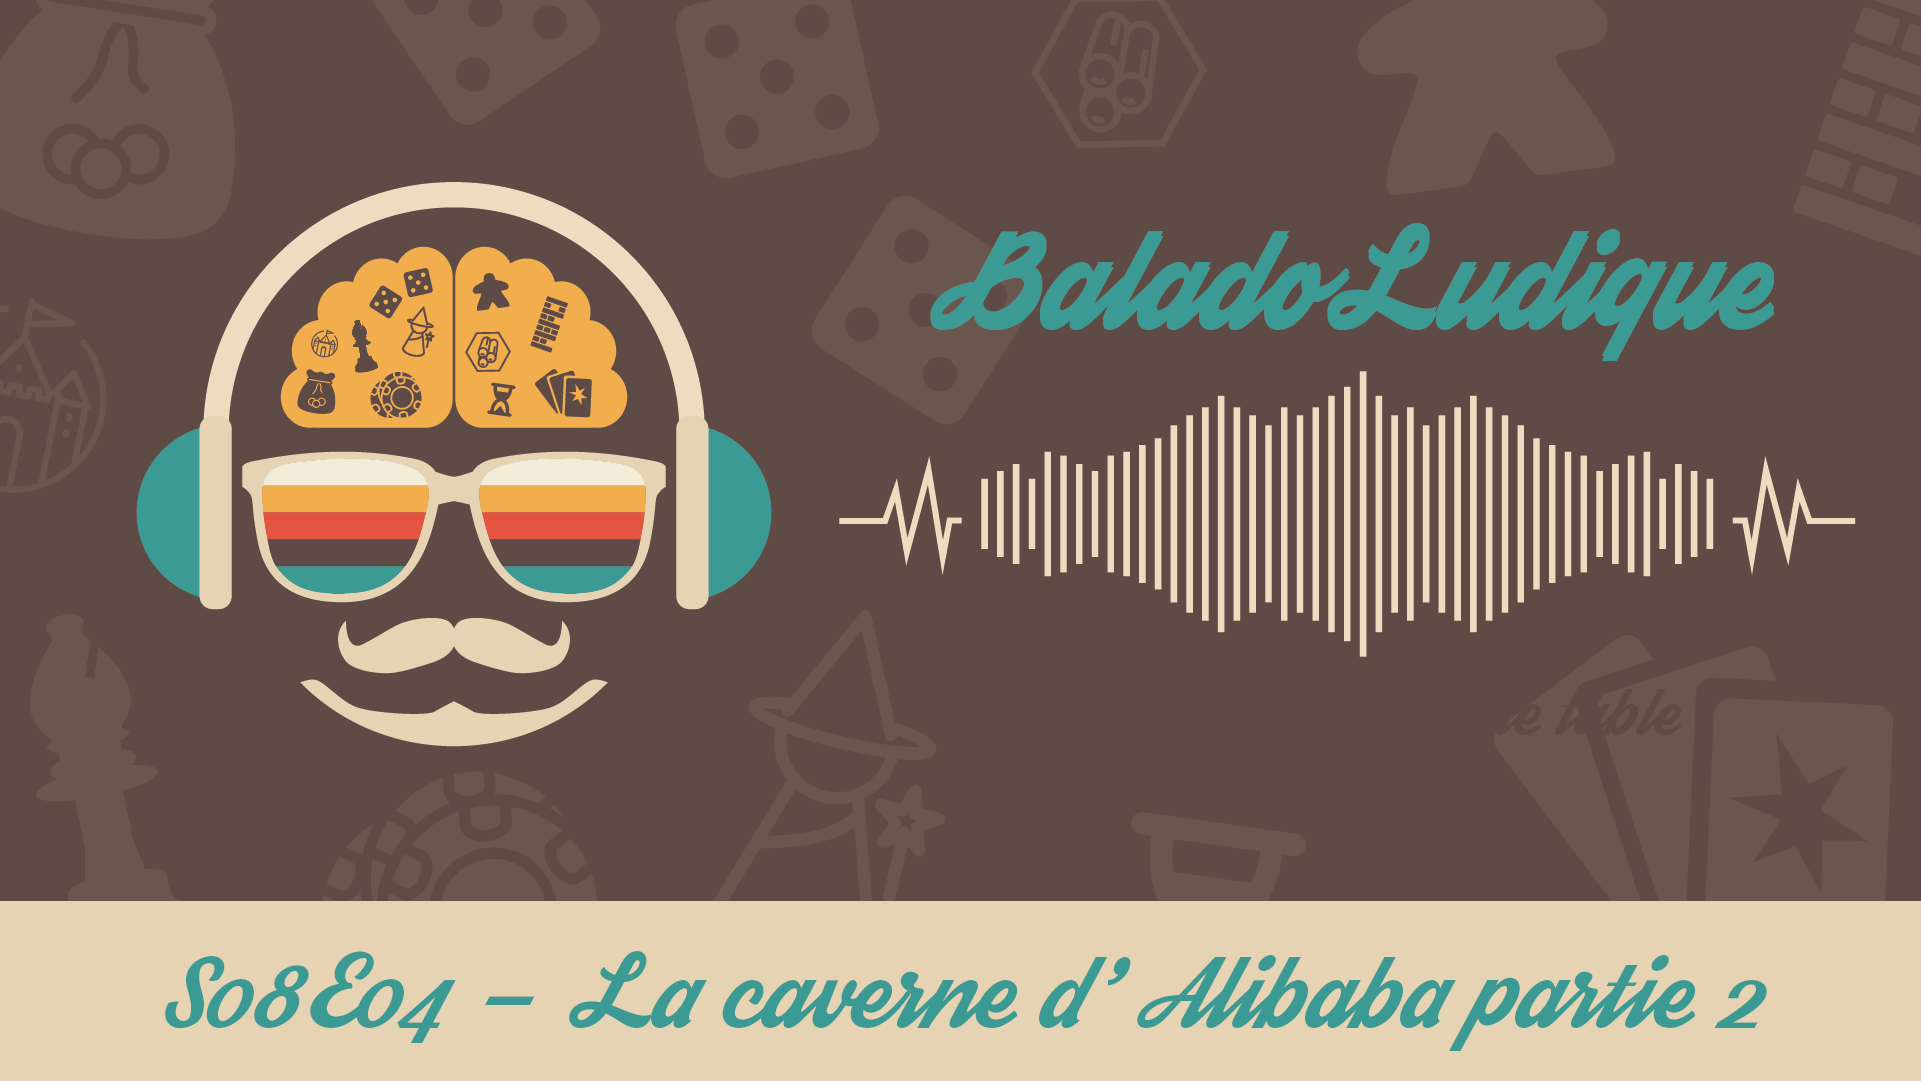 La caverne d'Alibaba (partie 2) - BaladoLudique - s08-e04